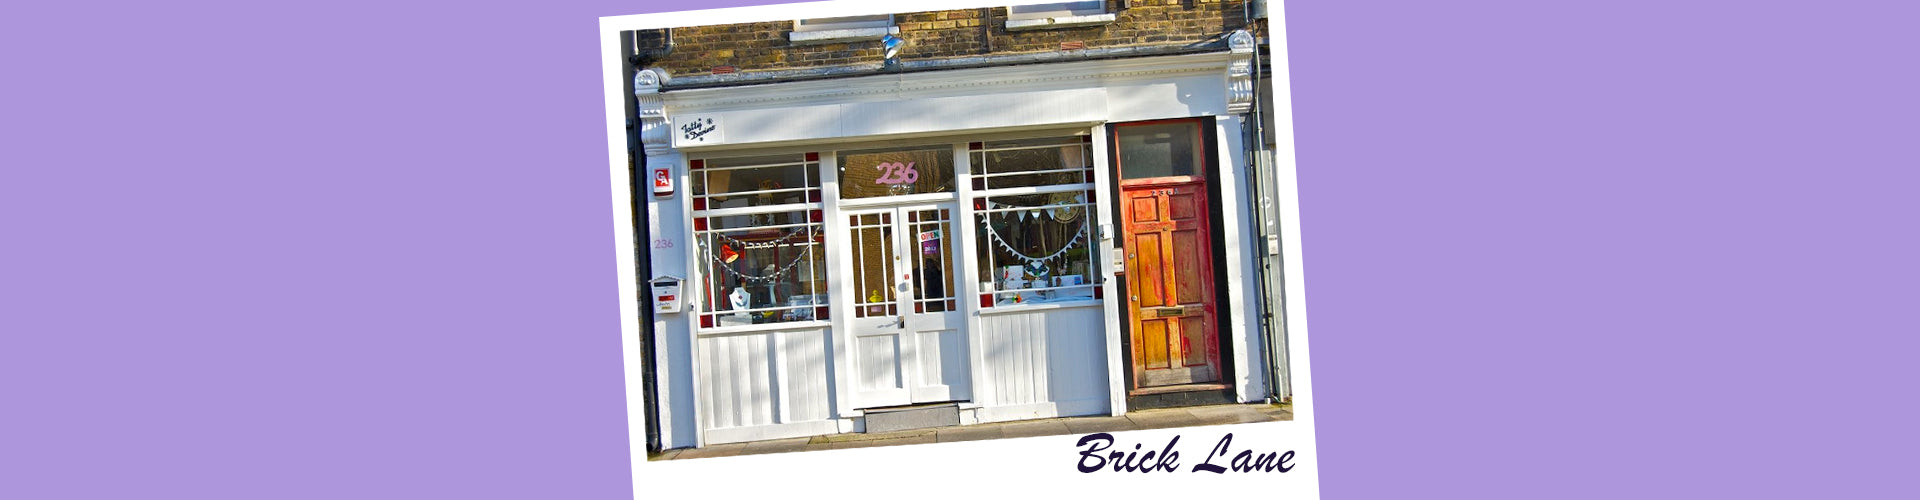 Visit Our Brick Lane Store!